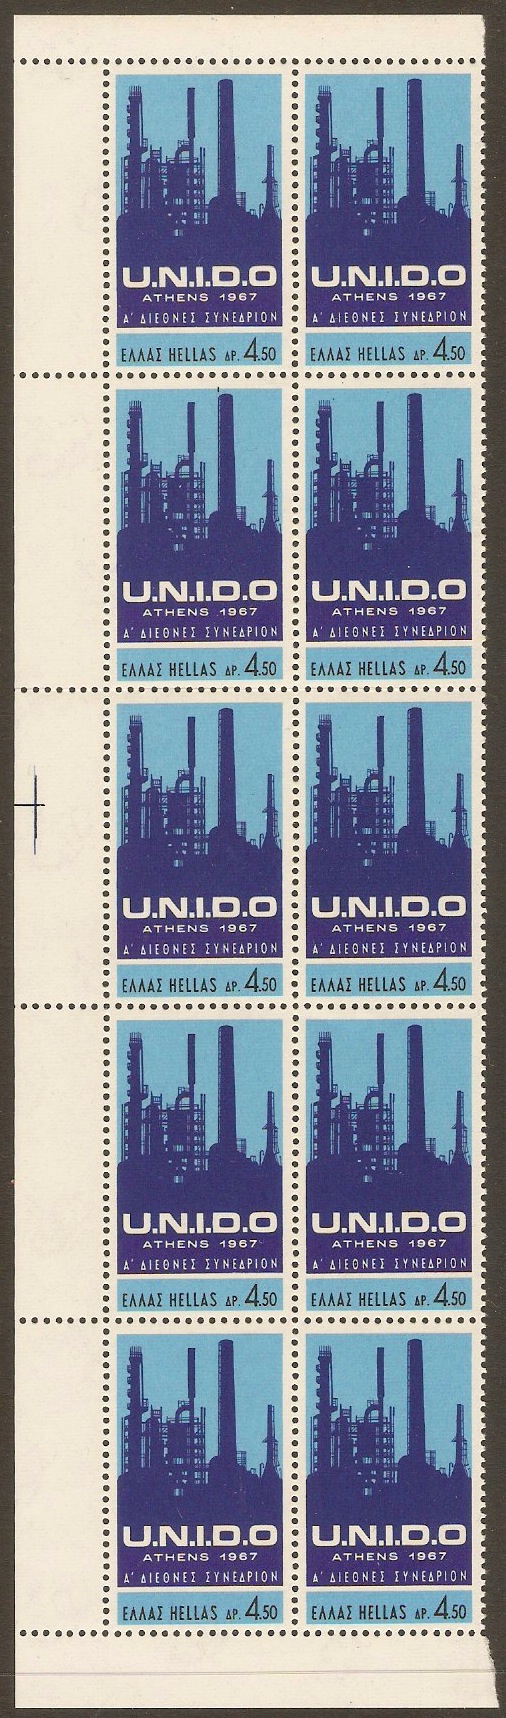 Greece 1967 4d.50 UNIDO Convention Stamp. SG1063.